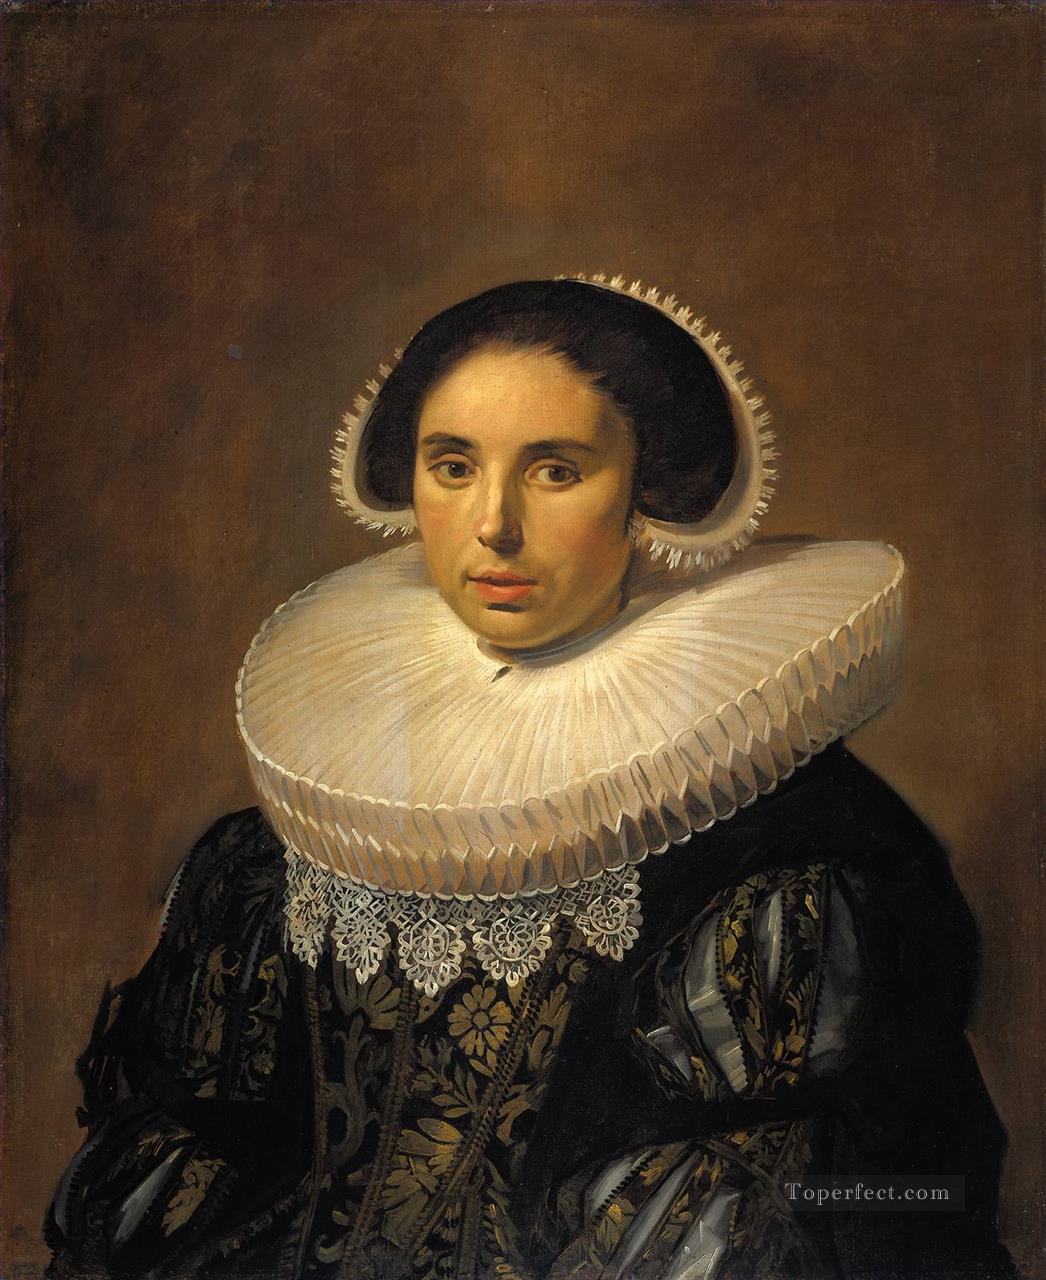 4-Portrait-of-a-woman-possibly-Sara-Wolphaerts-van-Diemen-Dutch-Golden-Age-Frans-Hals.jpg